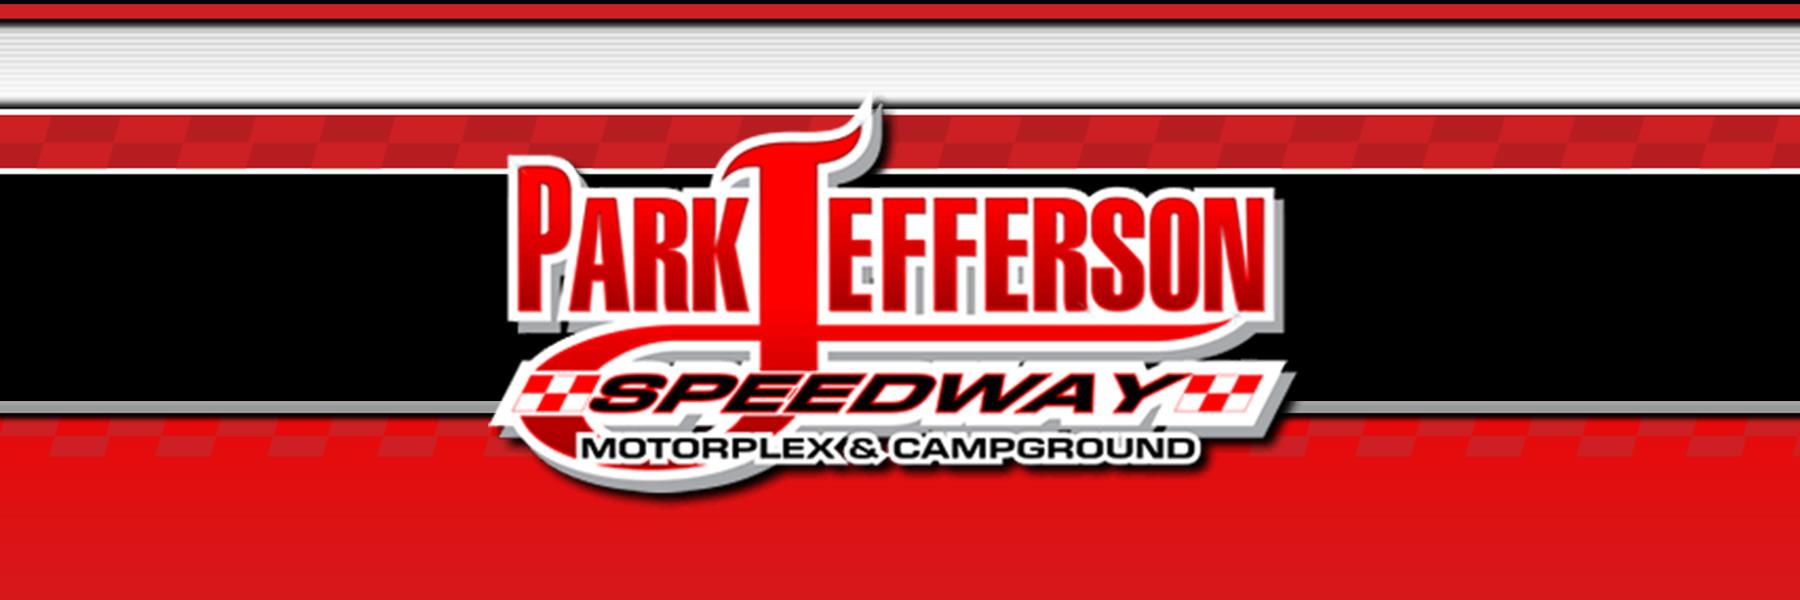 6/20/2022 - Park Jefferson International Speedway